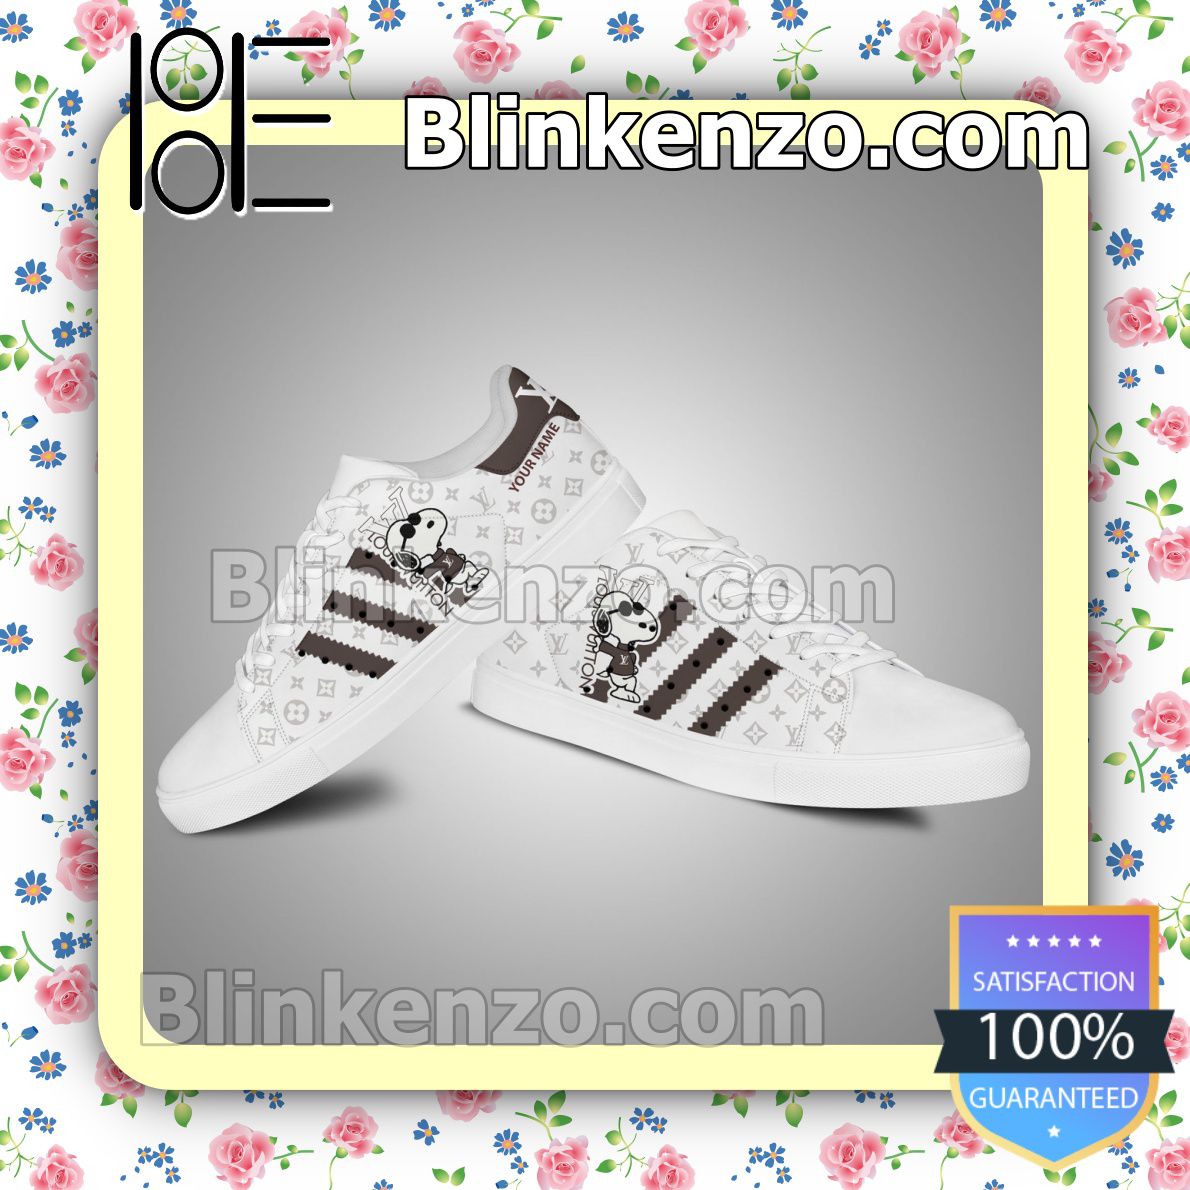 Personalized Louis Vuitton Monogram Snoopy Adidas Shoes - Blinkenzo